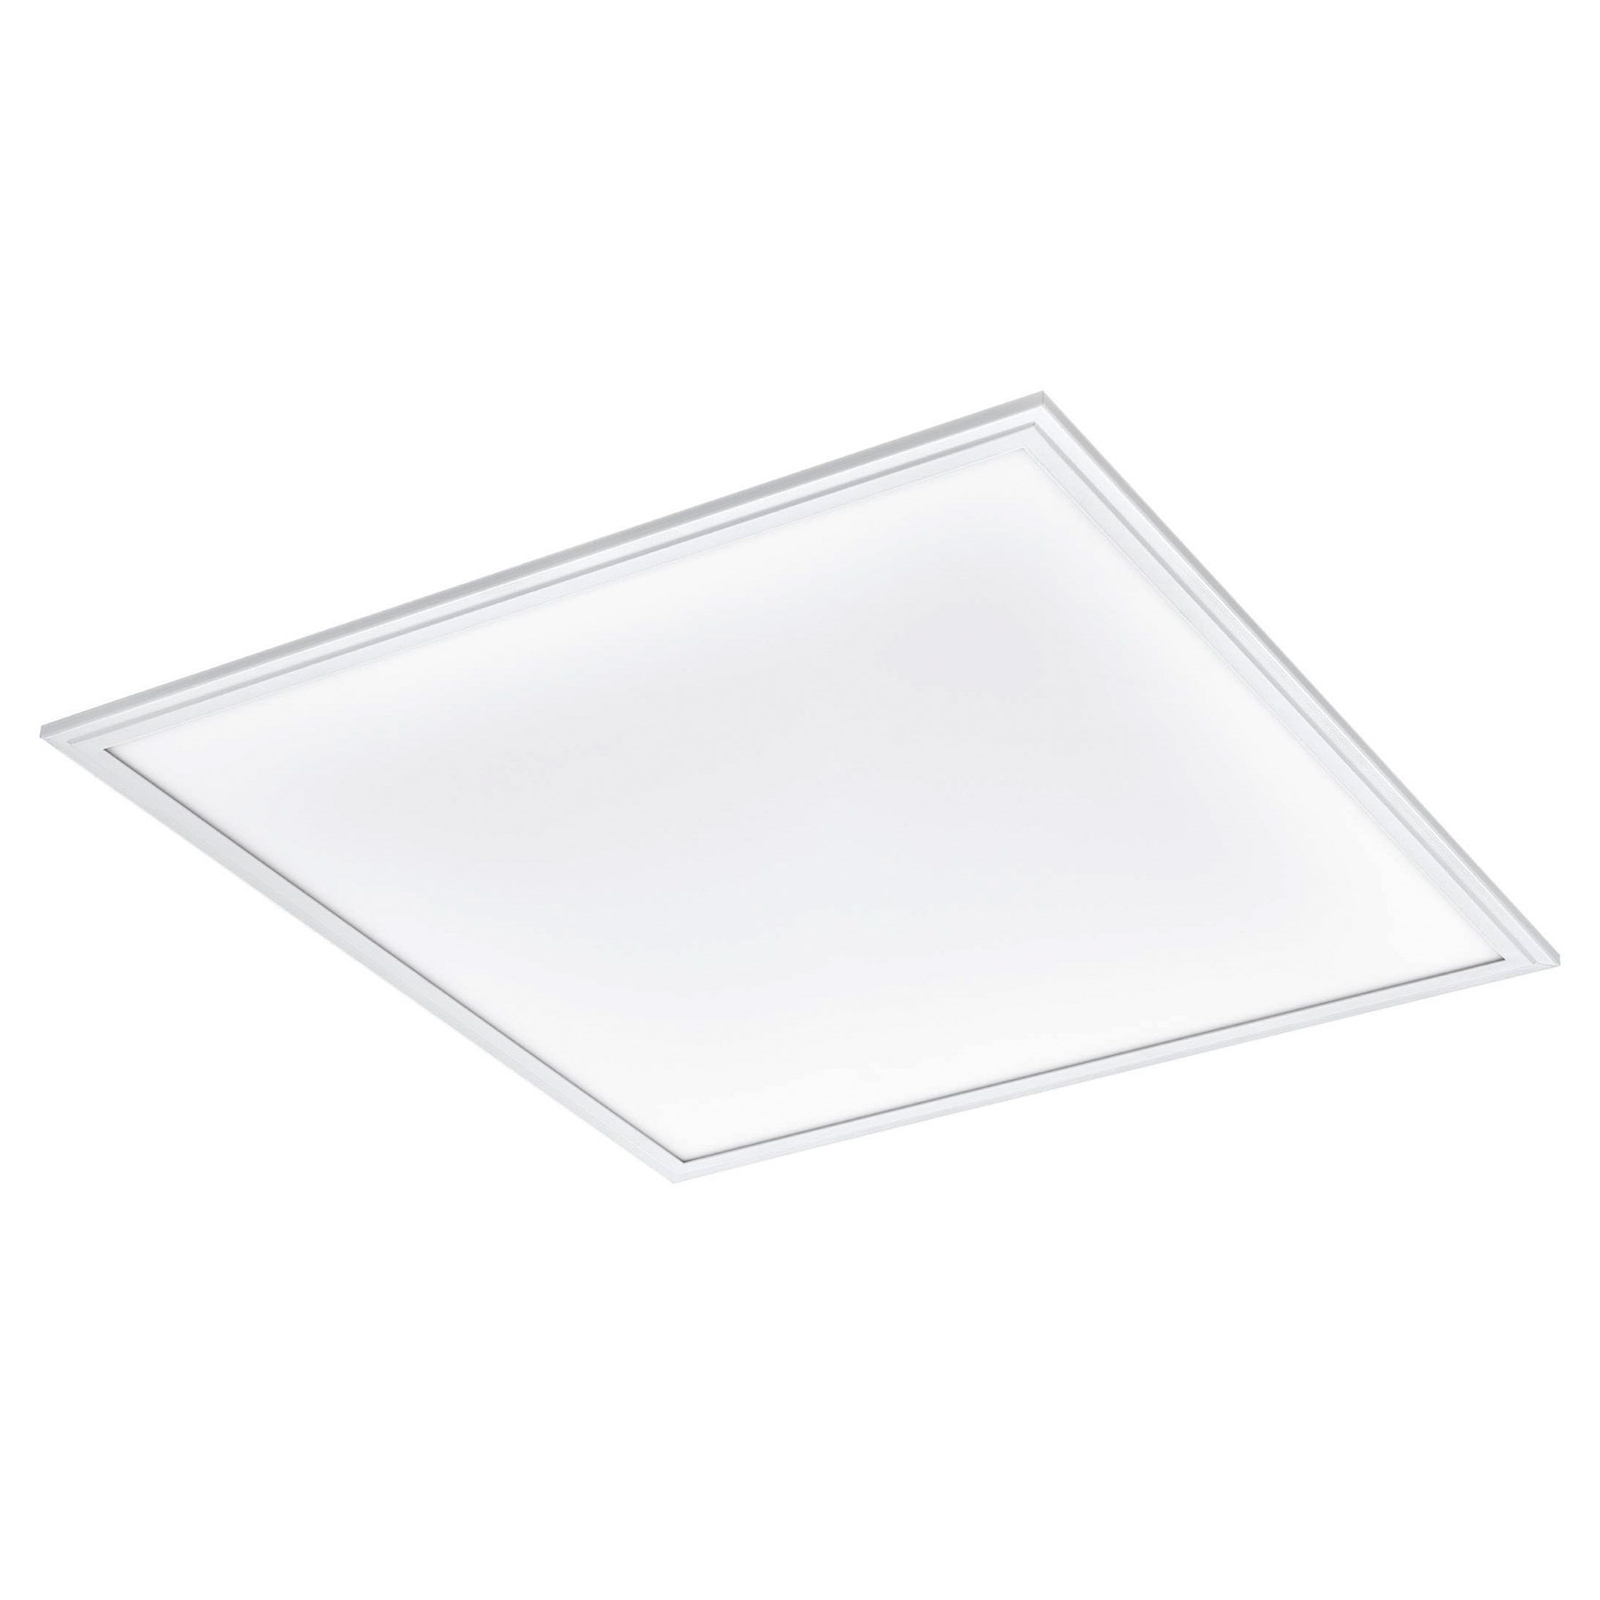 EGLO connect CCT ceiling lamp 59.5x59.5cm white